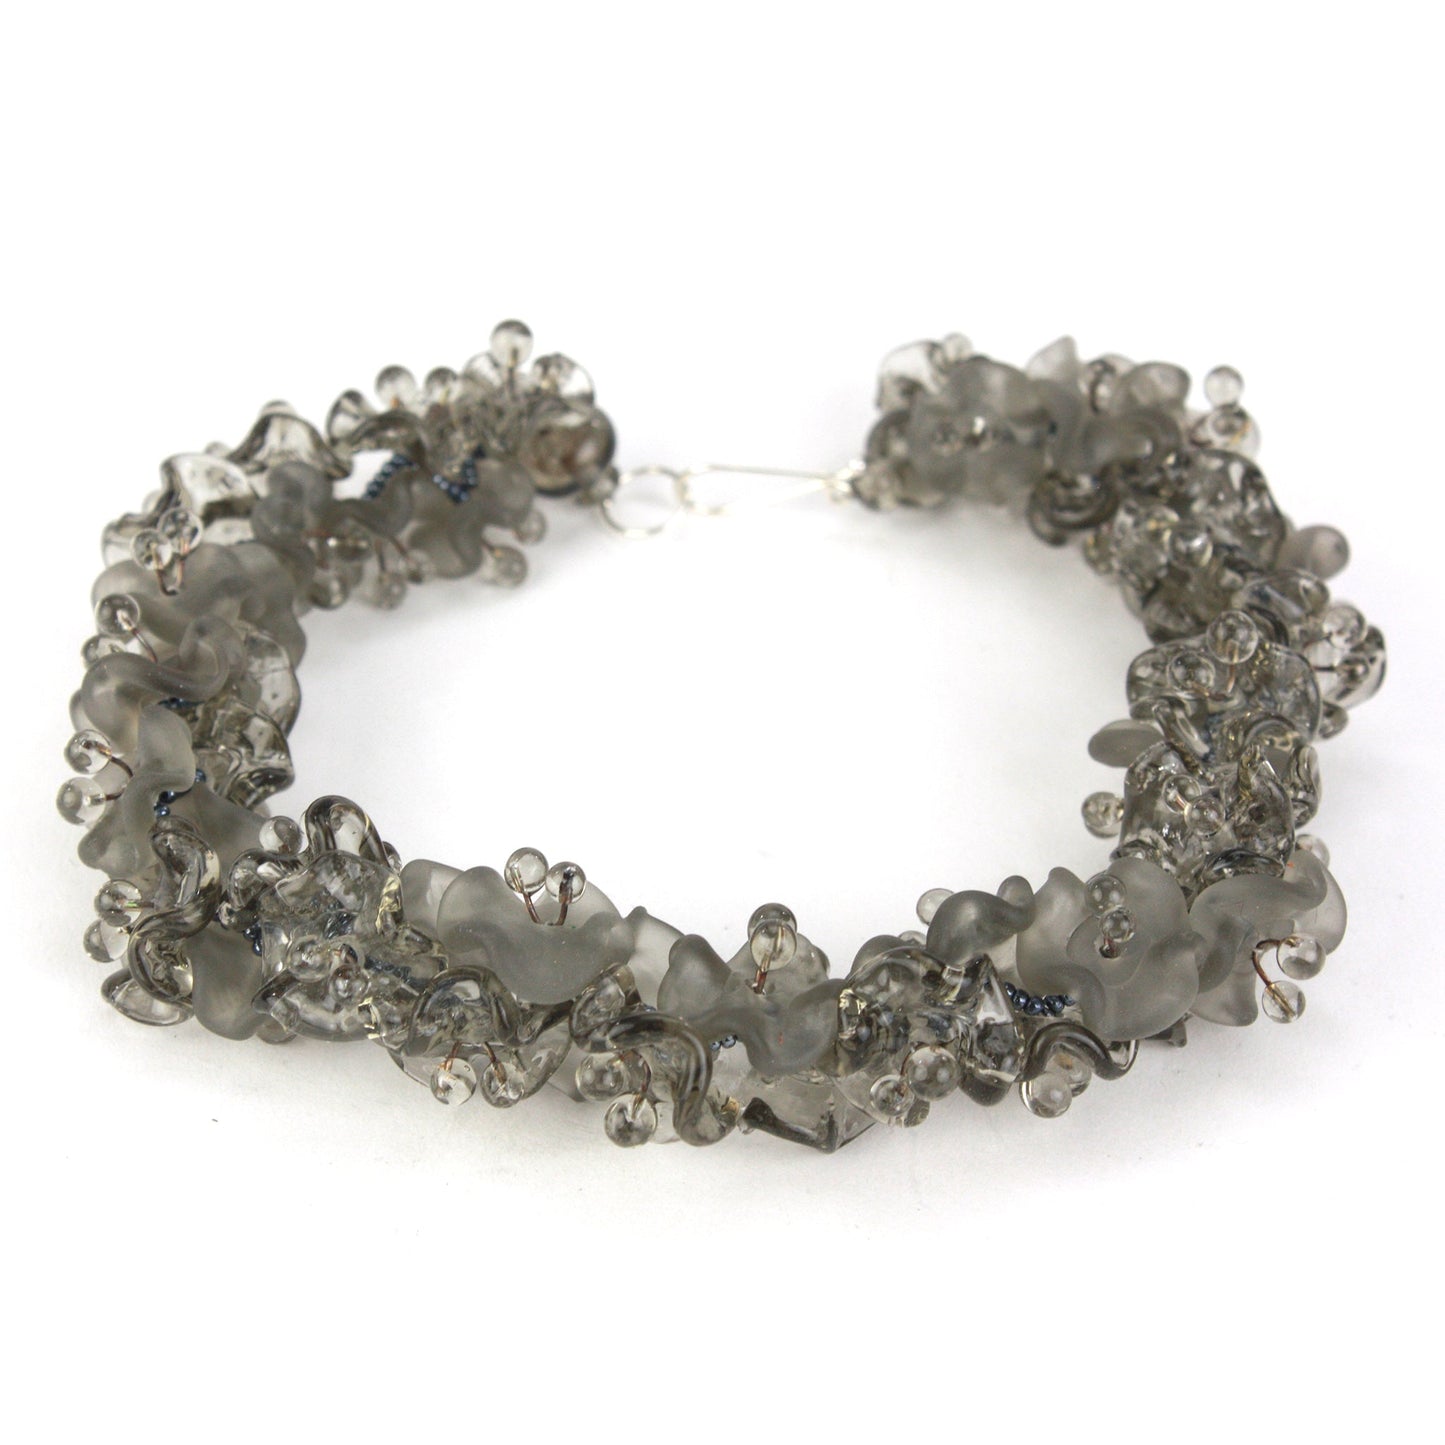 Florette necklace in grey